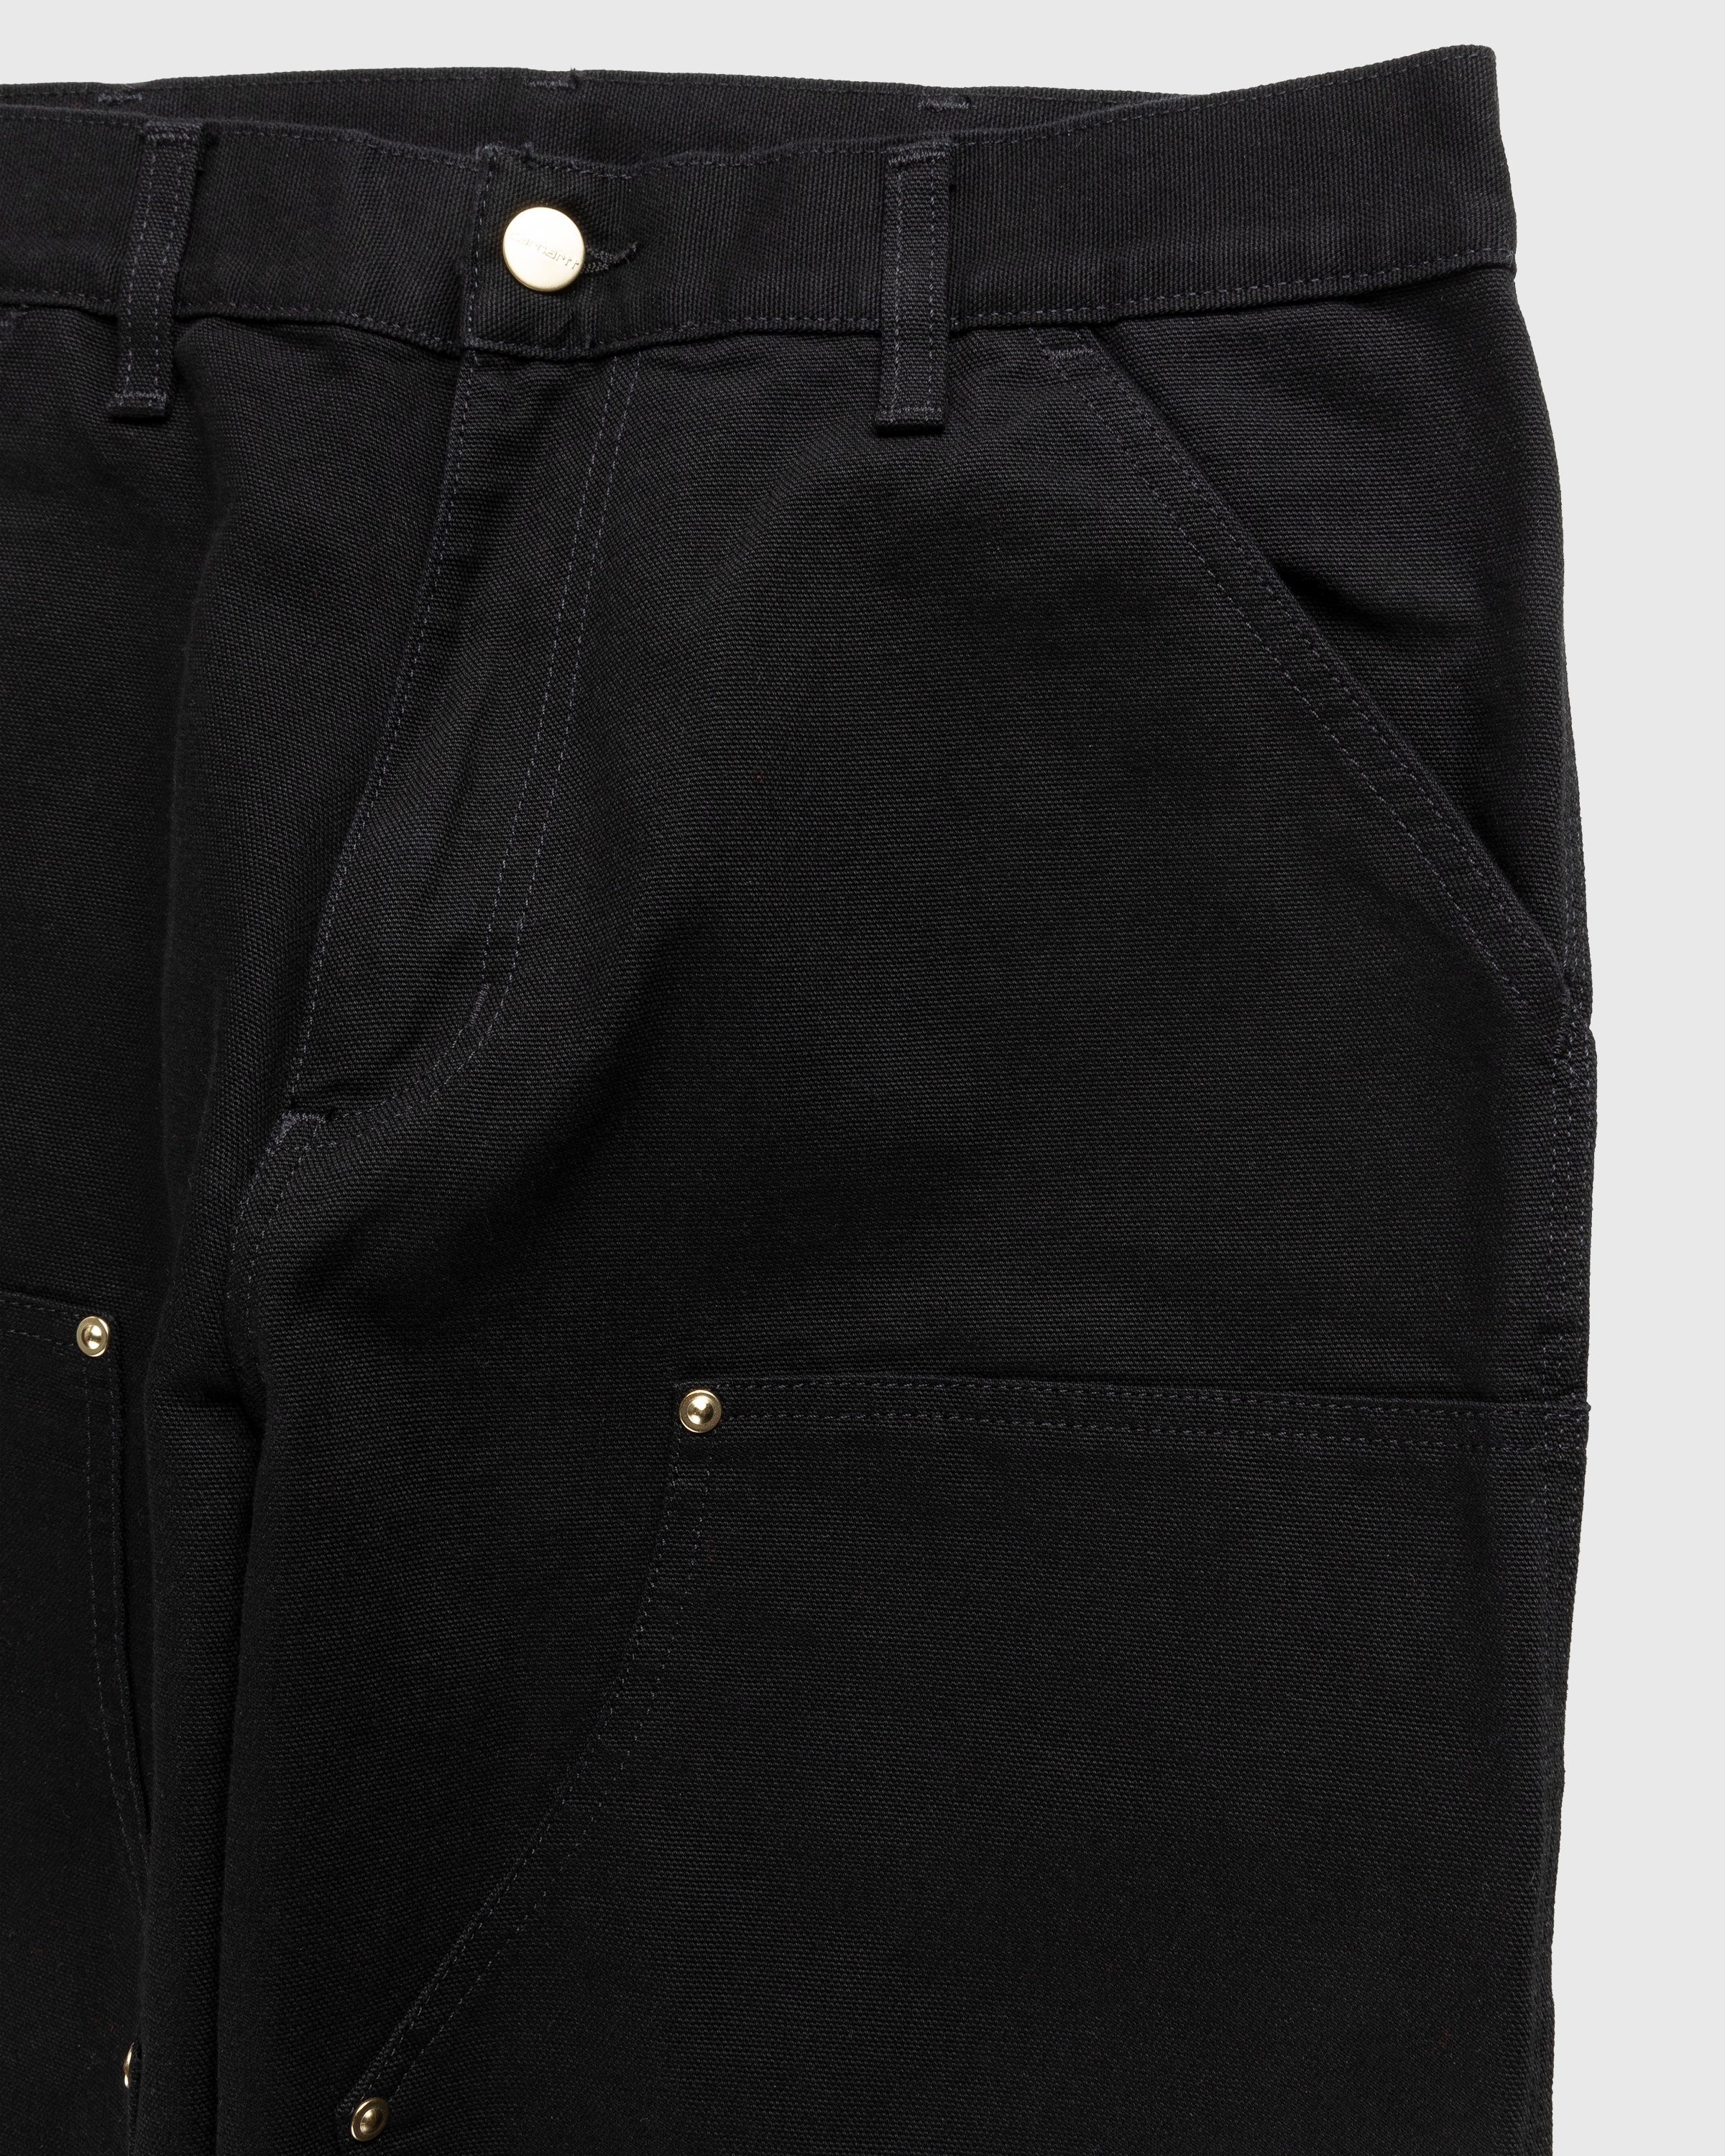 Carhartt WIP - Double Knee Pant Black - Clothing - Black - Image 3